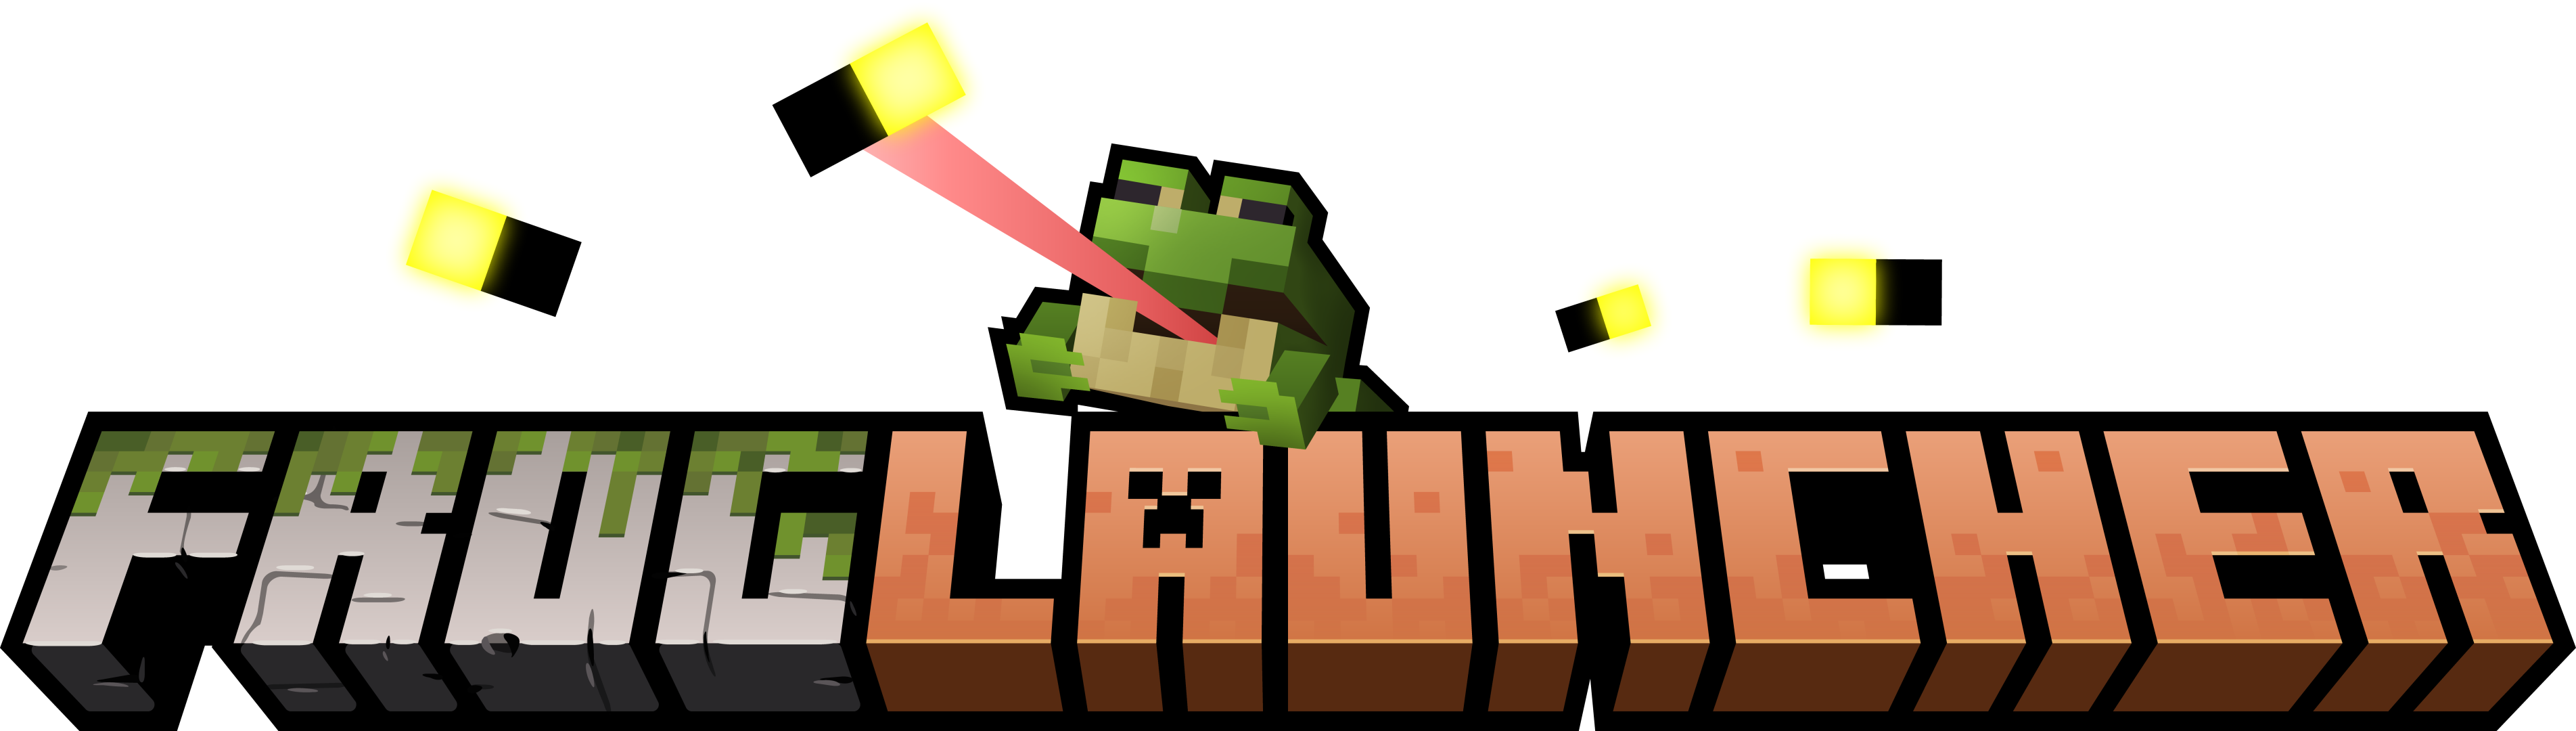 FrogLauncher logo